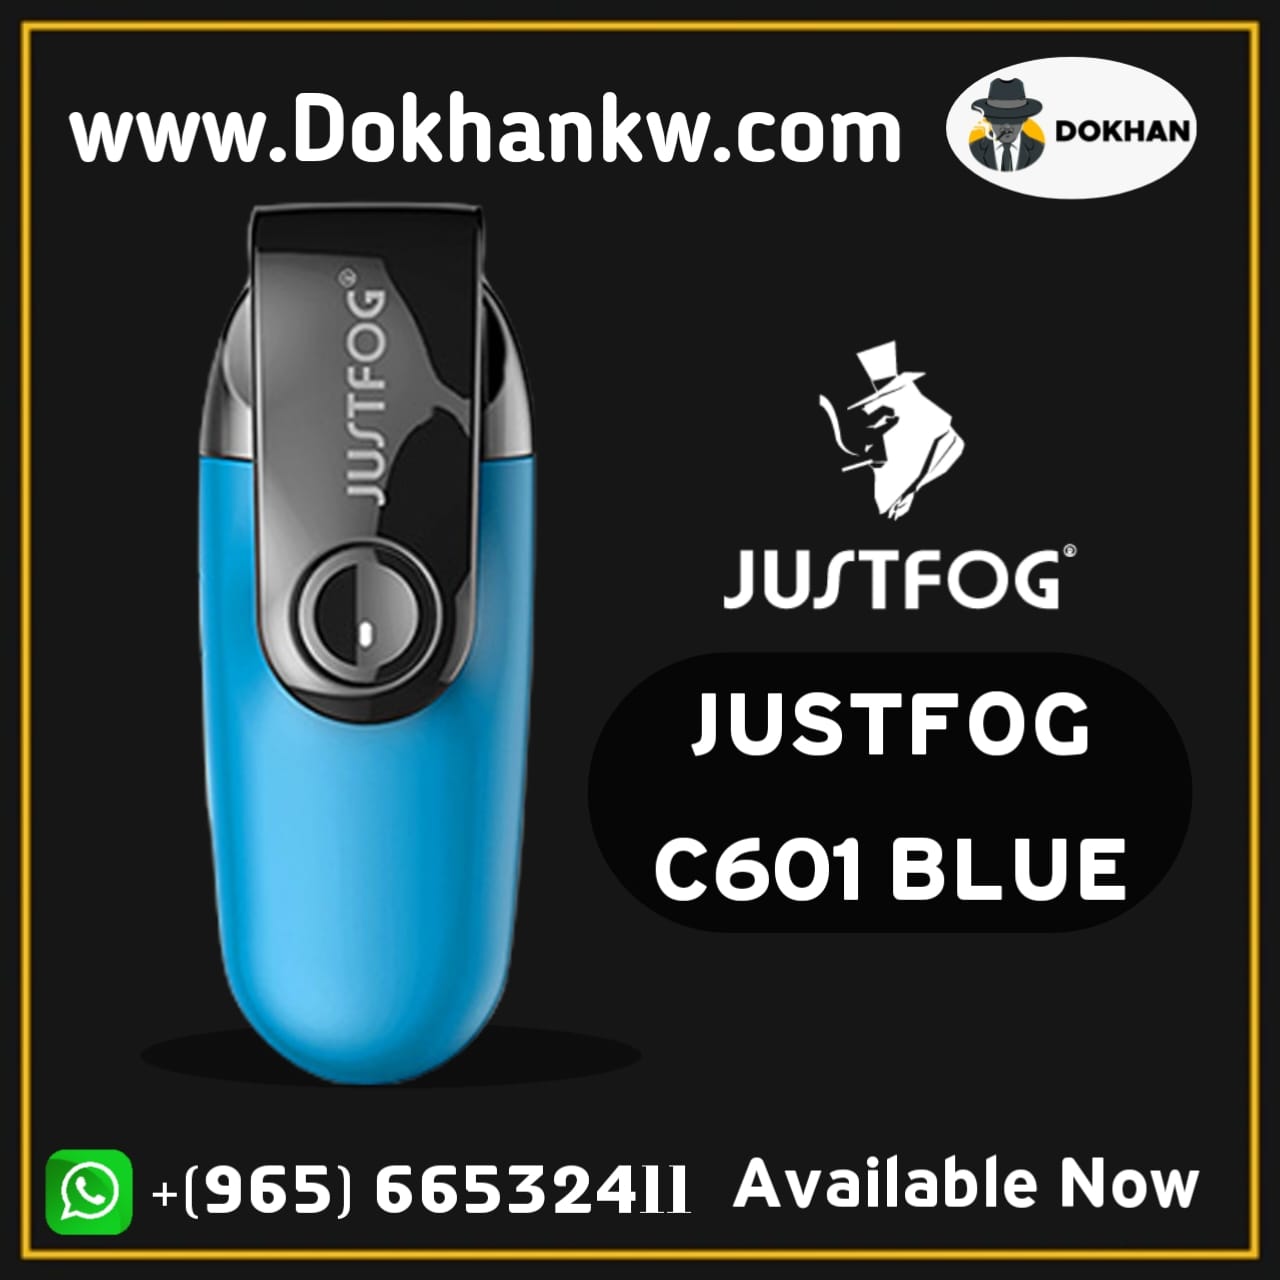 JUSTFOG C601 BLUE